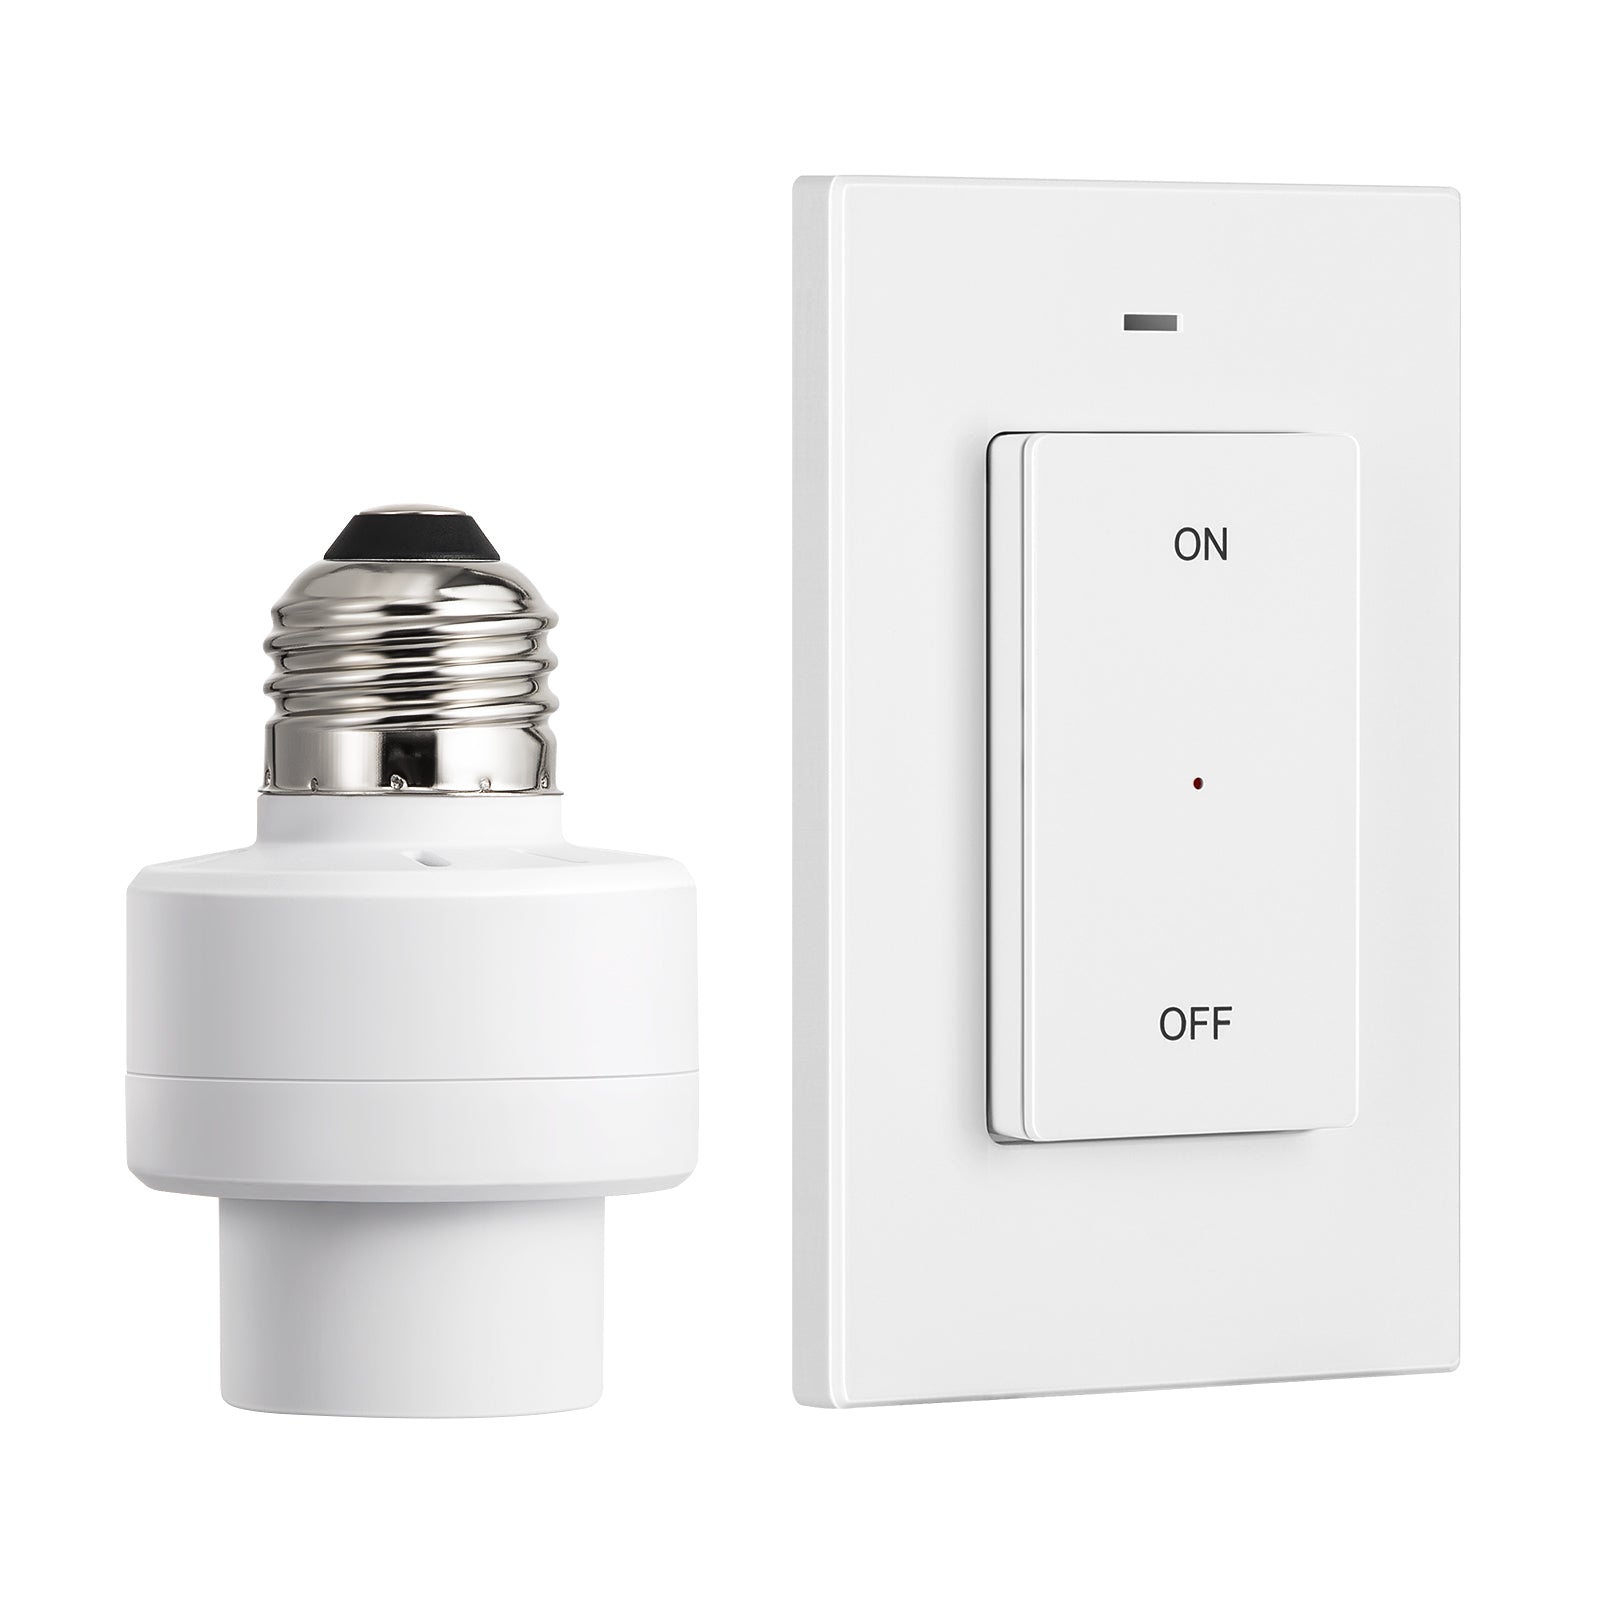 DEWENWILS Outdoor Indoor Remote Control Light Switch, 110v 120v